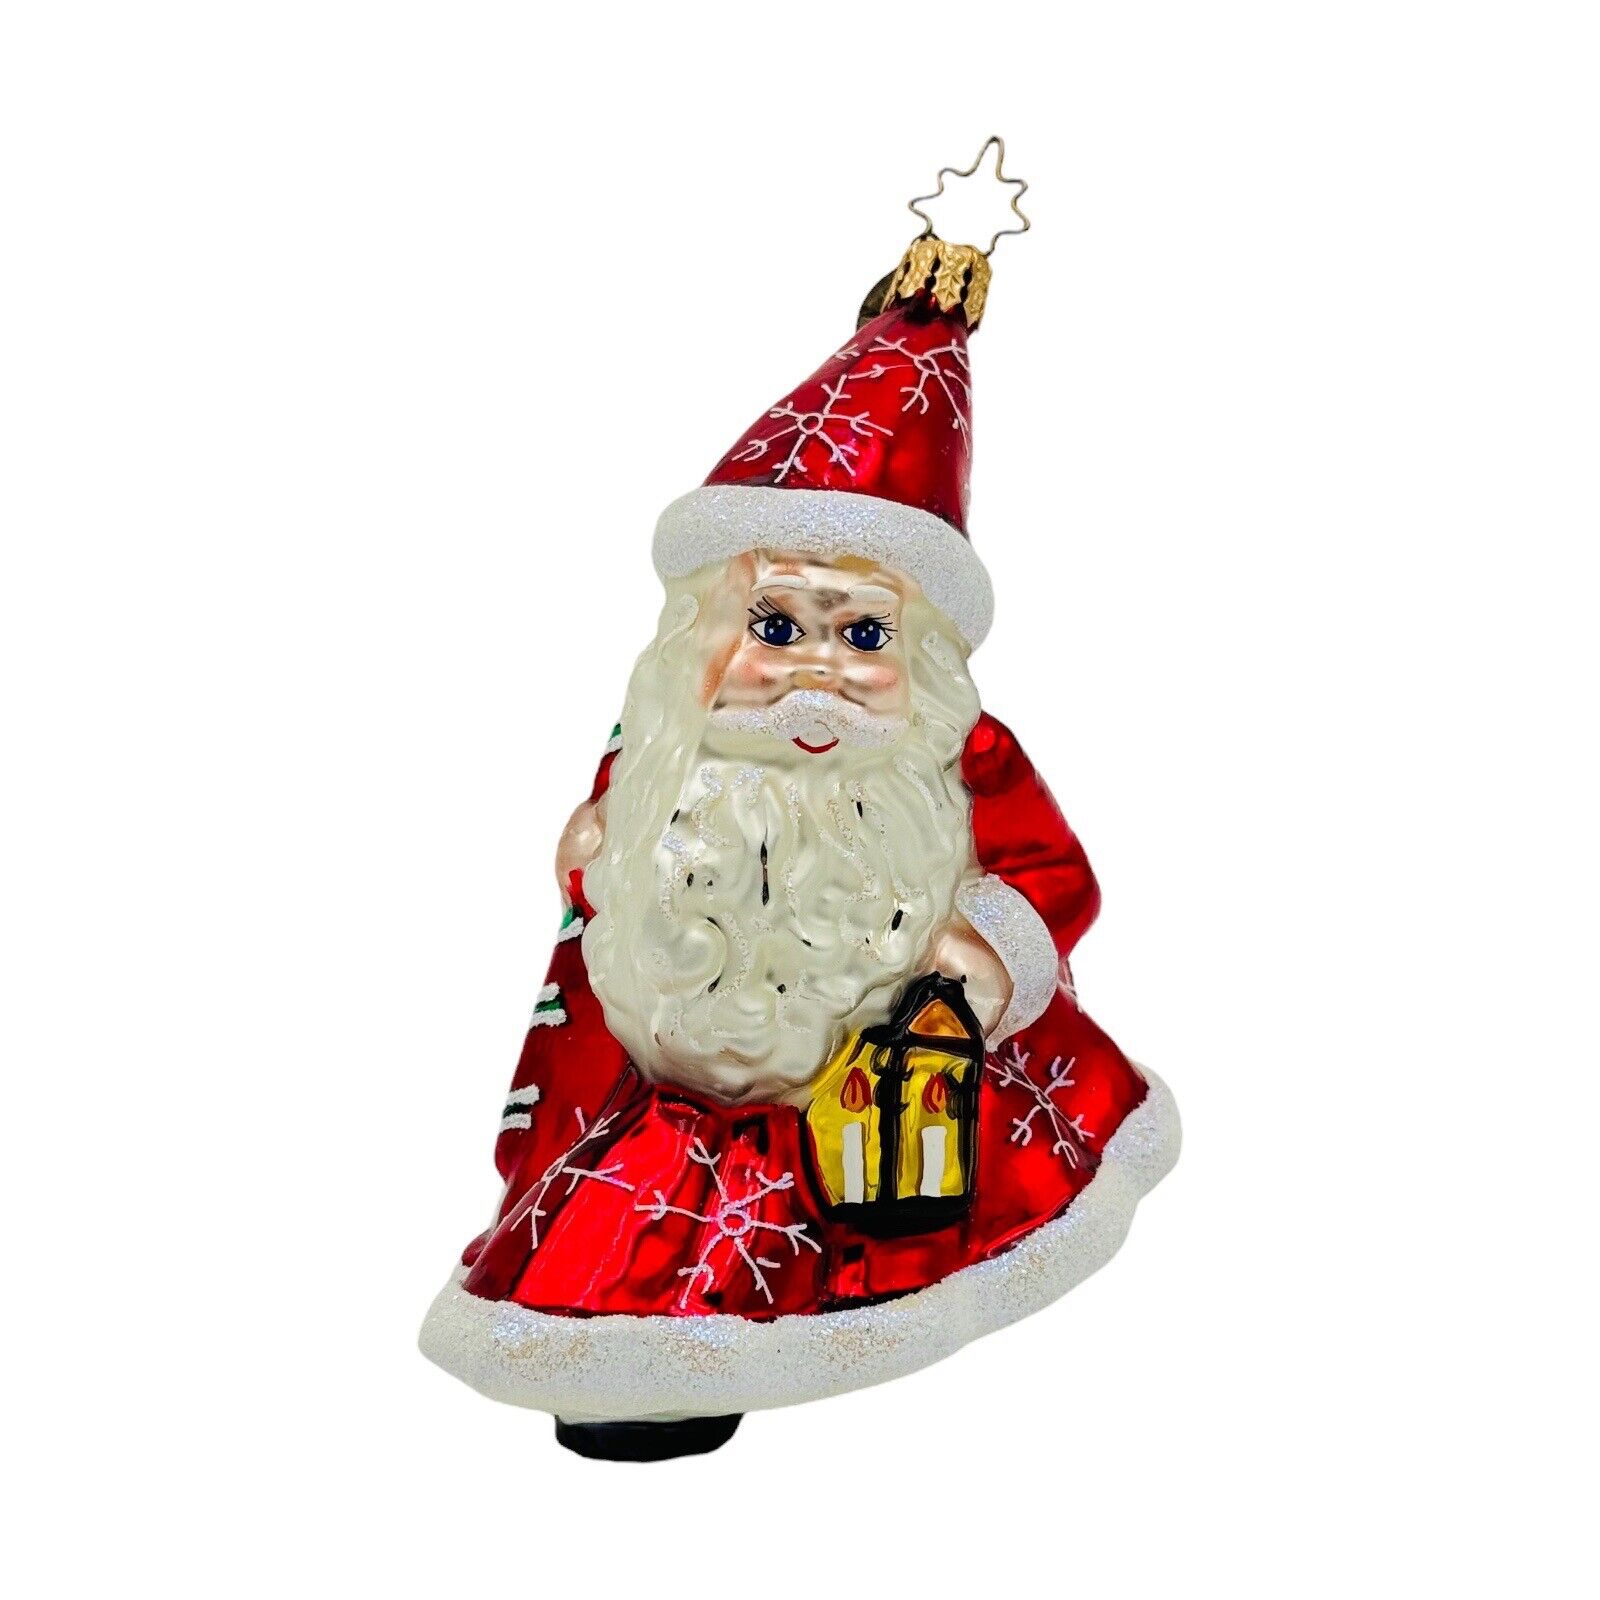 Christopher Radko Santa Spritelite Glass Christmas Ornament 4” Santa Claus